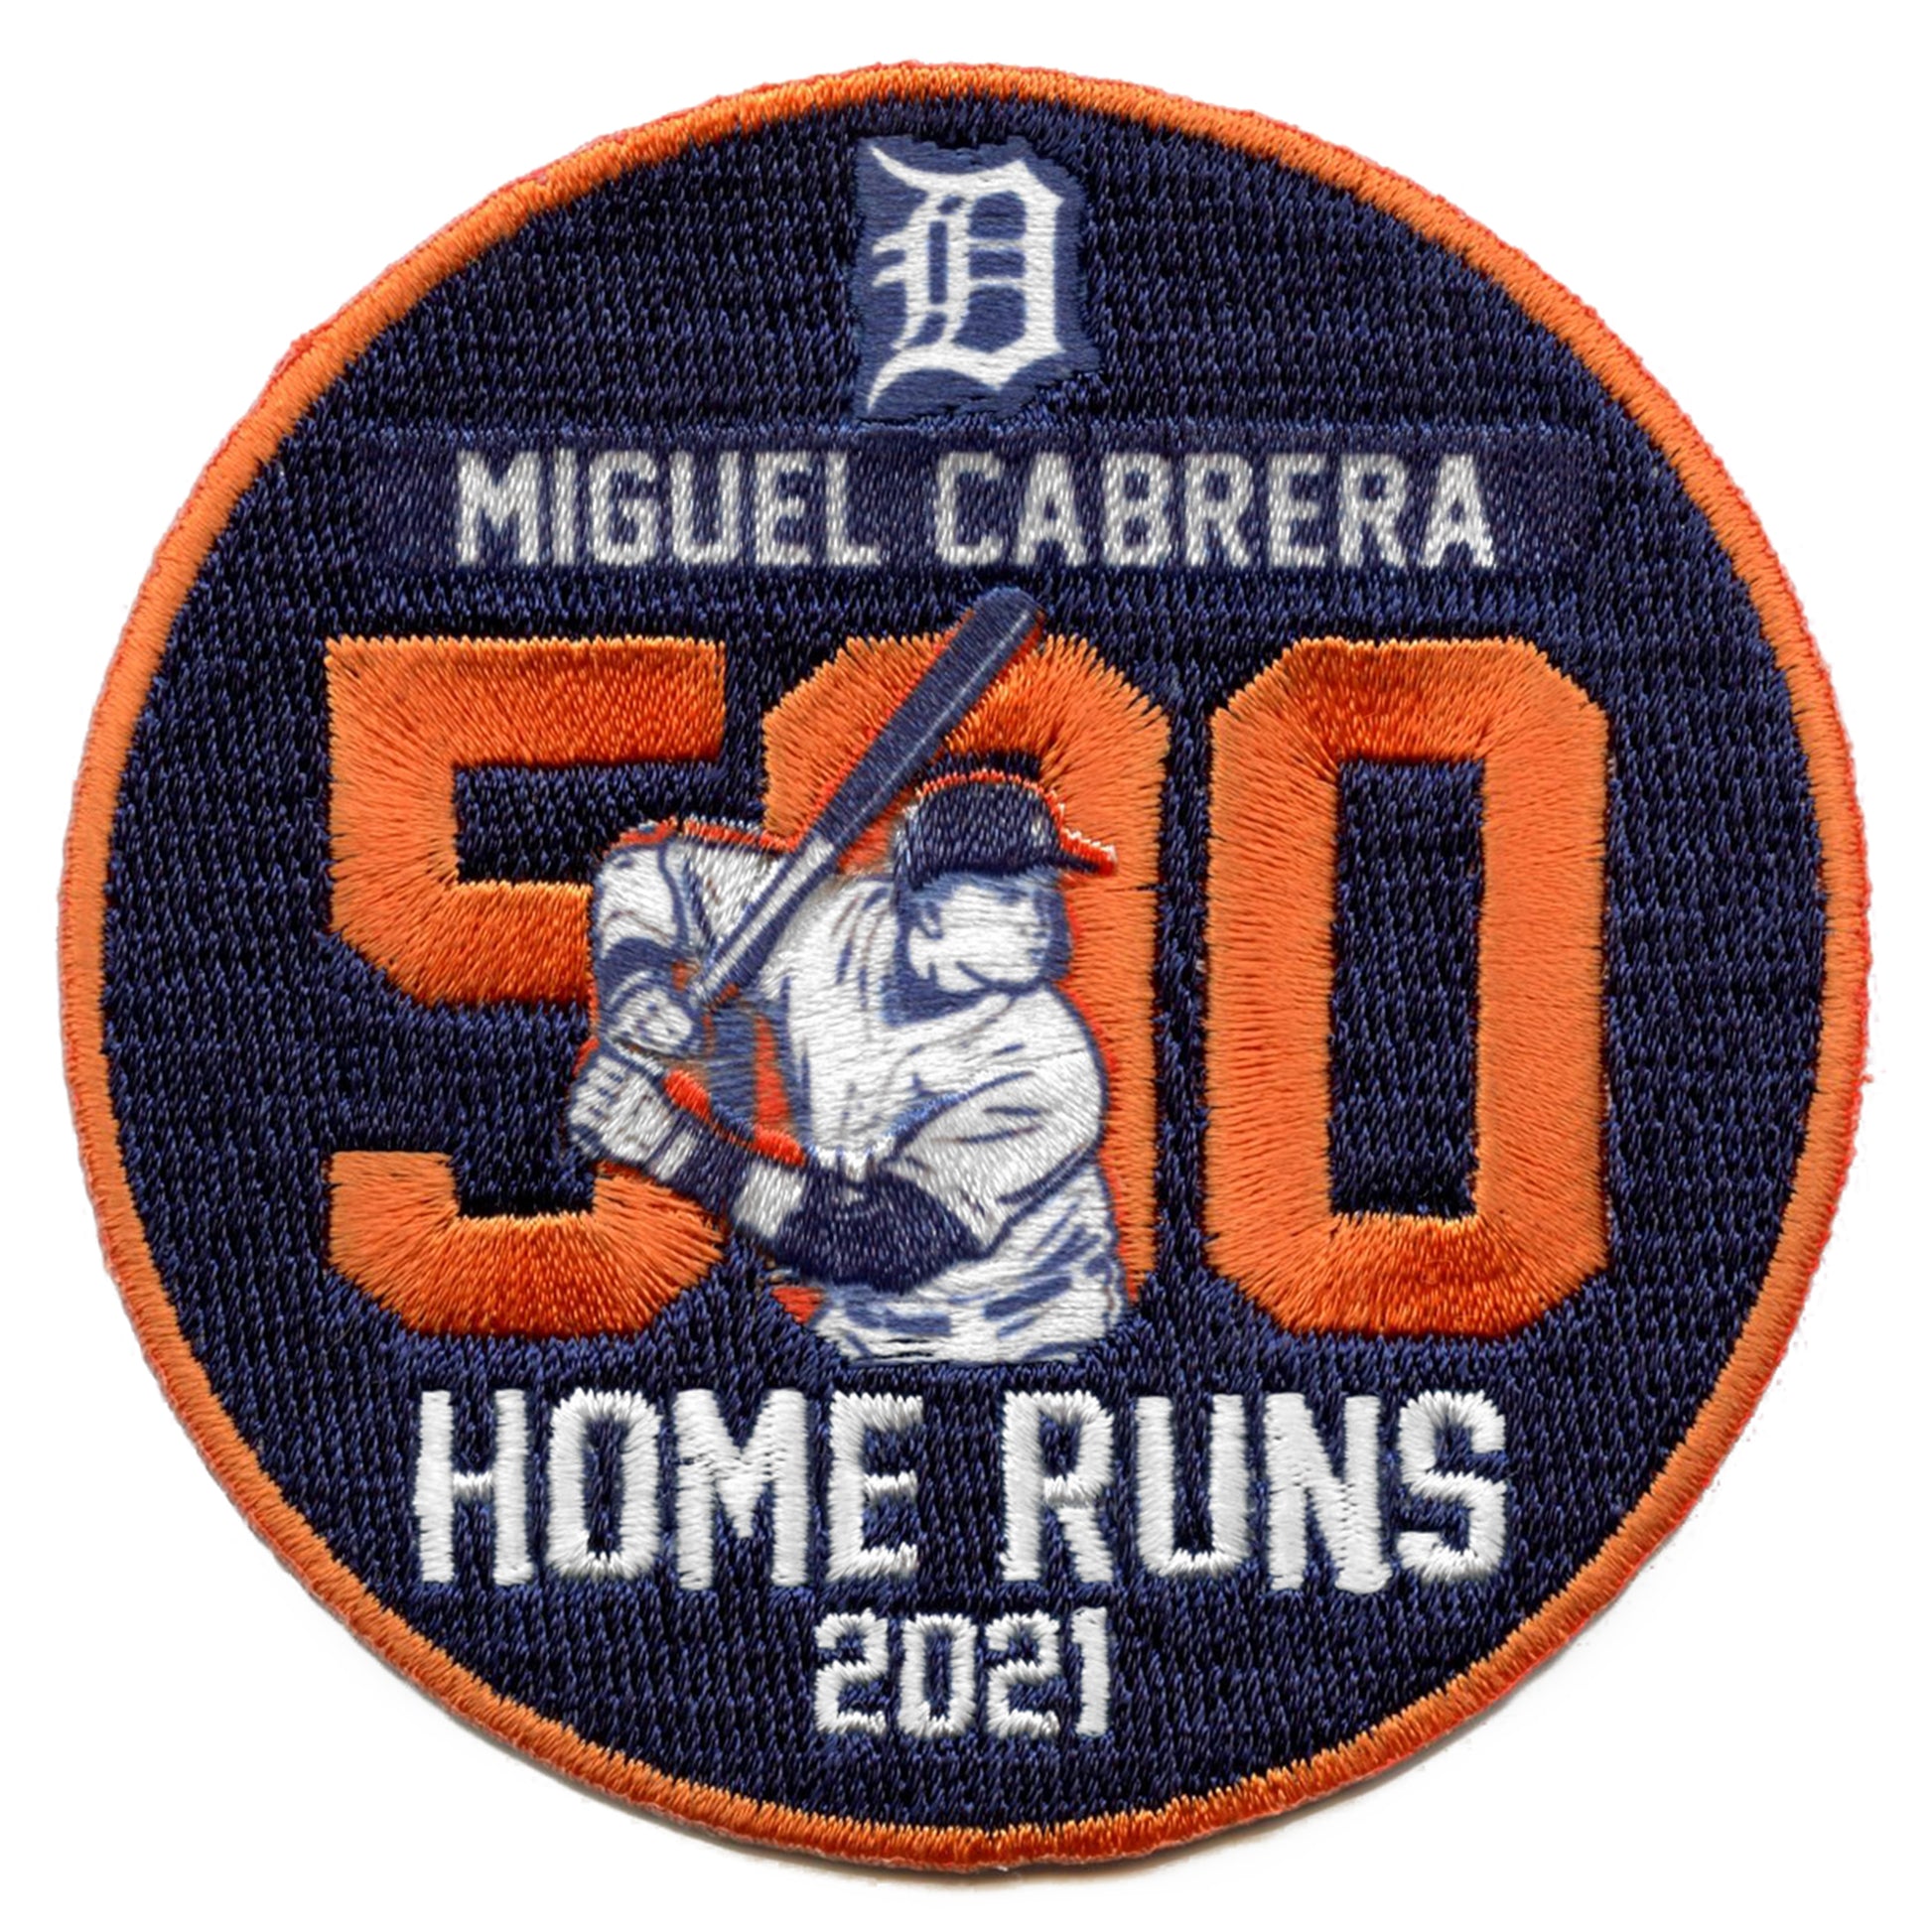 Detroit Tigers Miguel Cabrera 500 Homeruns Commemorative Patch 